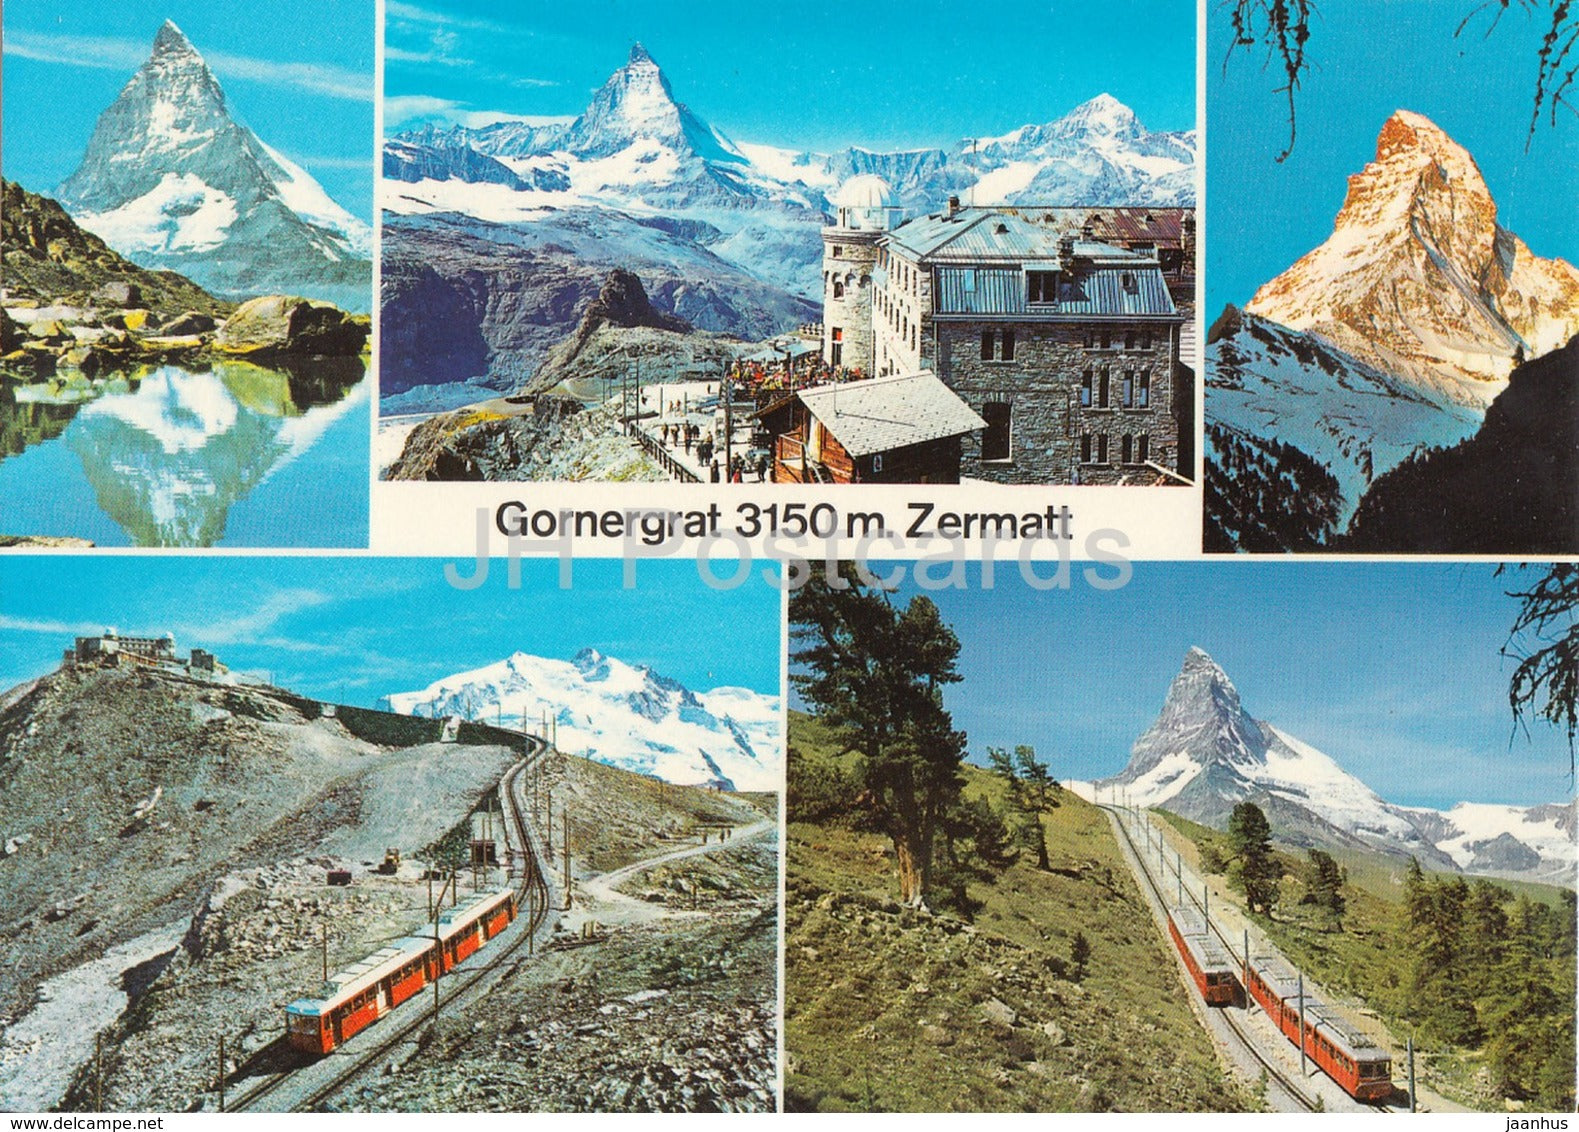 Gornegrat 3150 m - Zermatt - train - railway - Switzerland - unused - JH Postcards